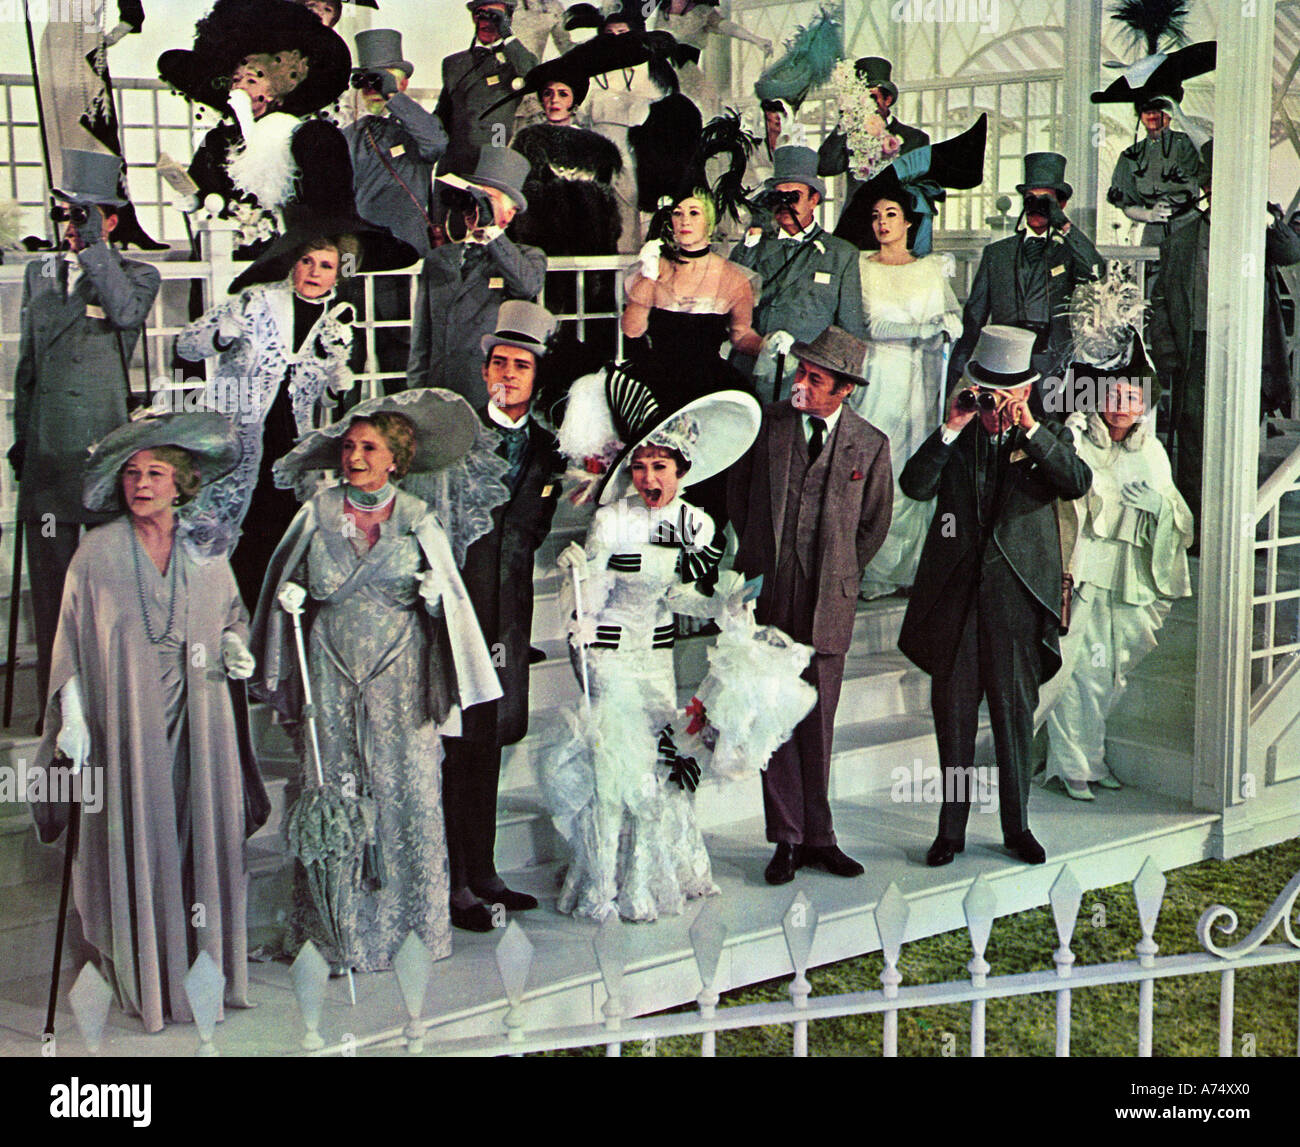 https://c8.alamy.com/comp/A74XX0/my-fair-lady-1964-cbswarner-film-with-audrey-hepburn-A74XX0.jpg